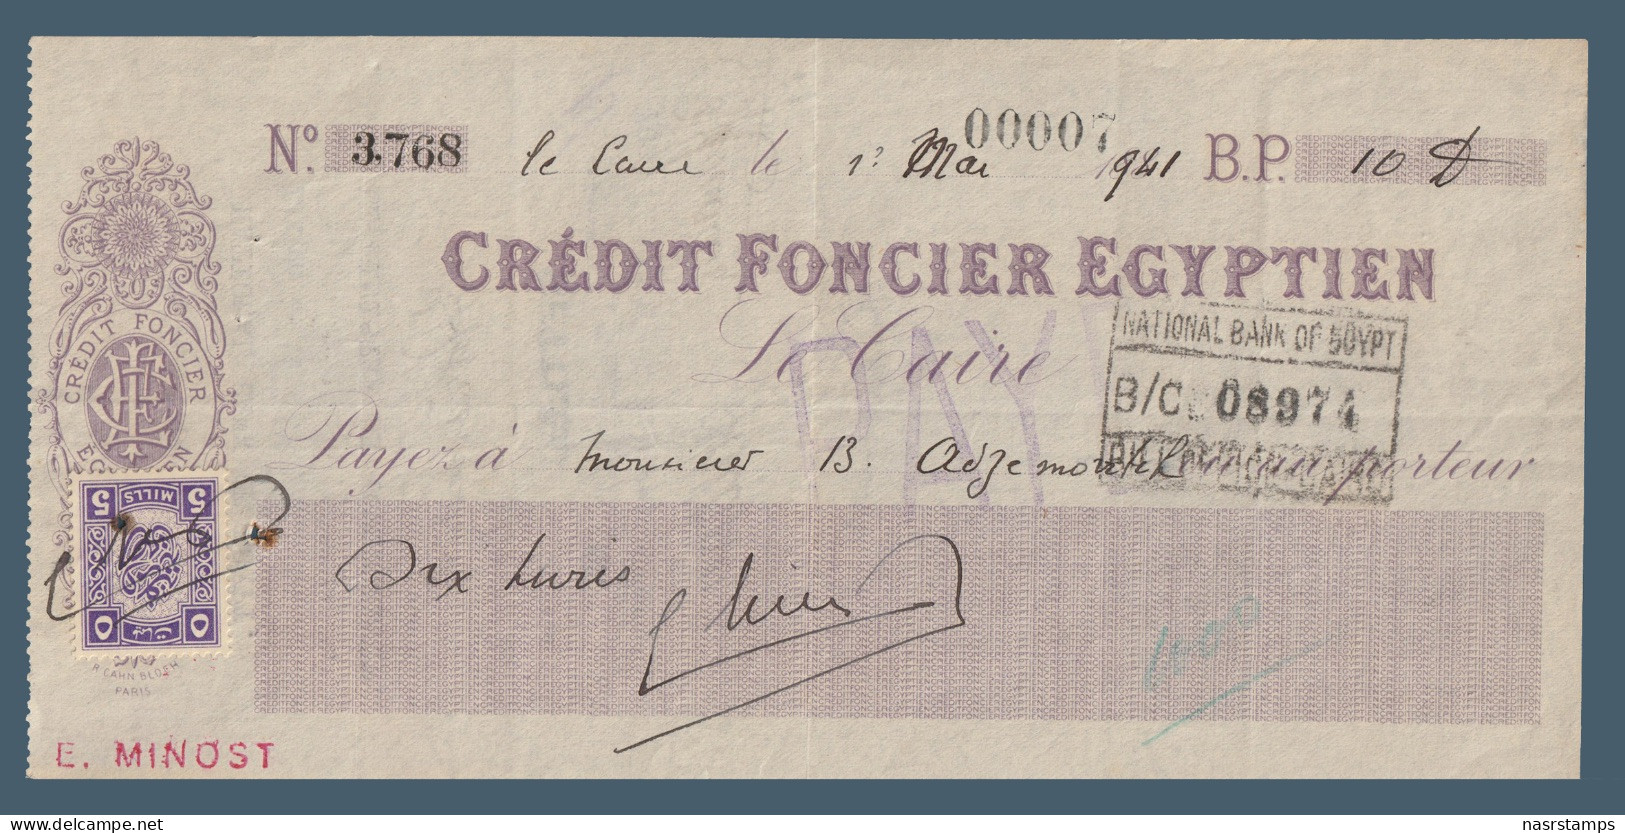 Egypt - 1941 - Vintage Check - ( Credit Foncier Egyptien - Cairo ) - Cheques En Traveller's Cheques